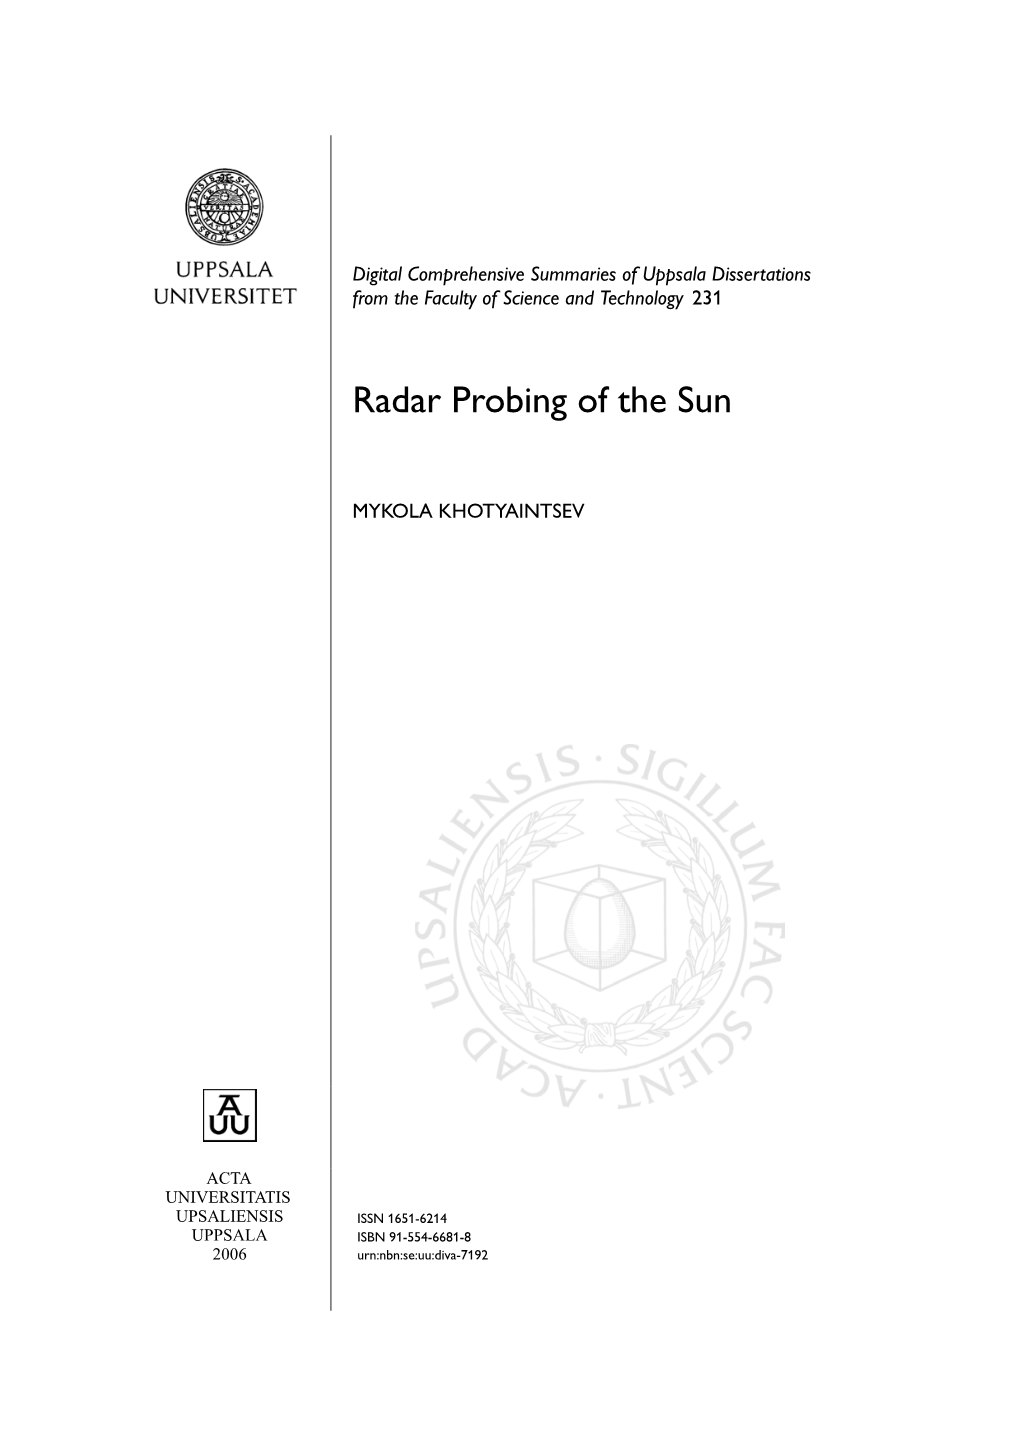 Radar Probing of the Sun